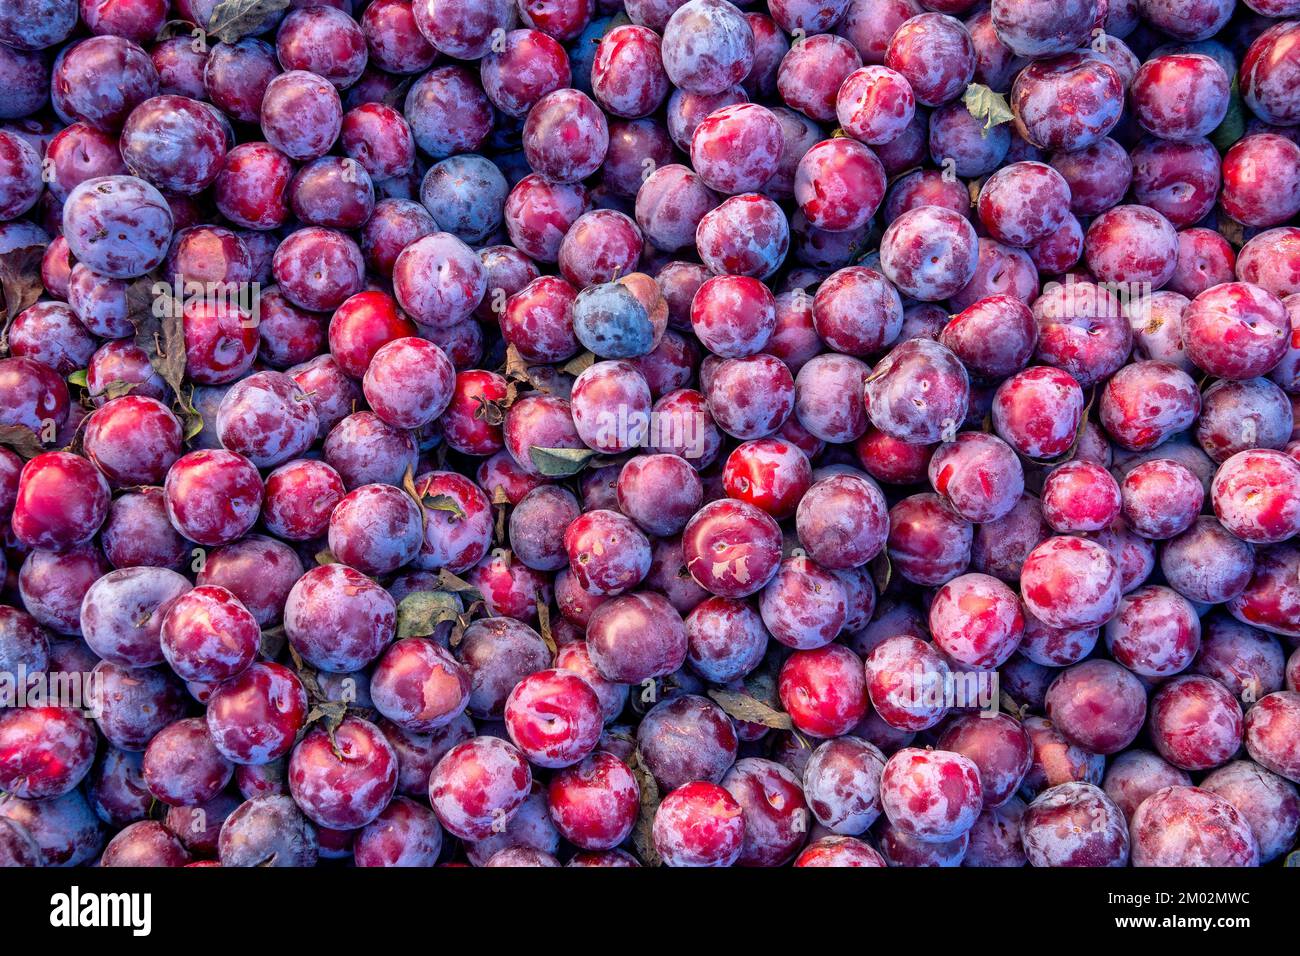 Close-up of some Prune plums (Prunus domestica) Stock Photo